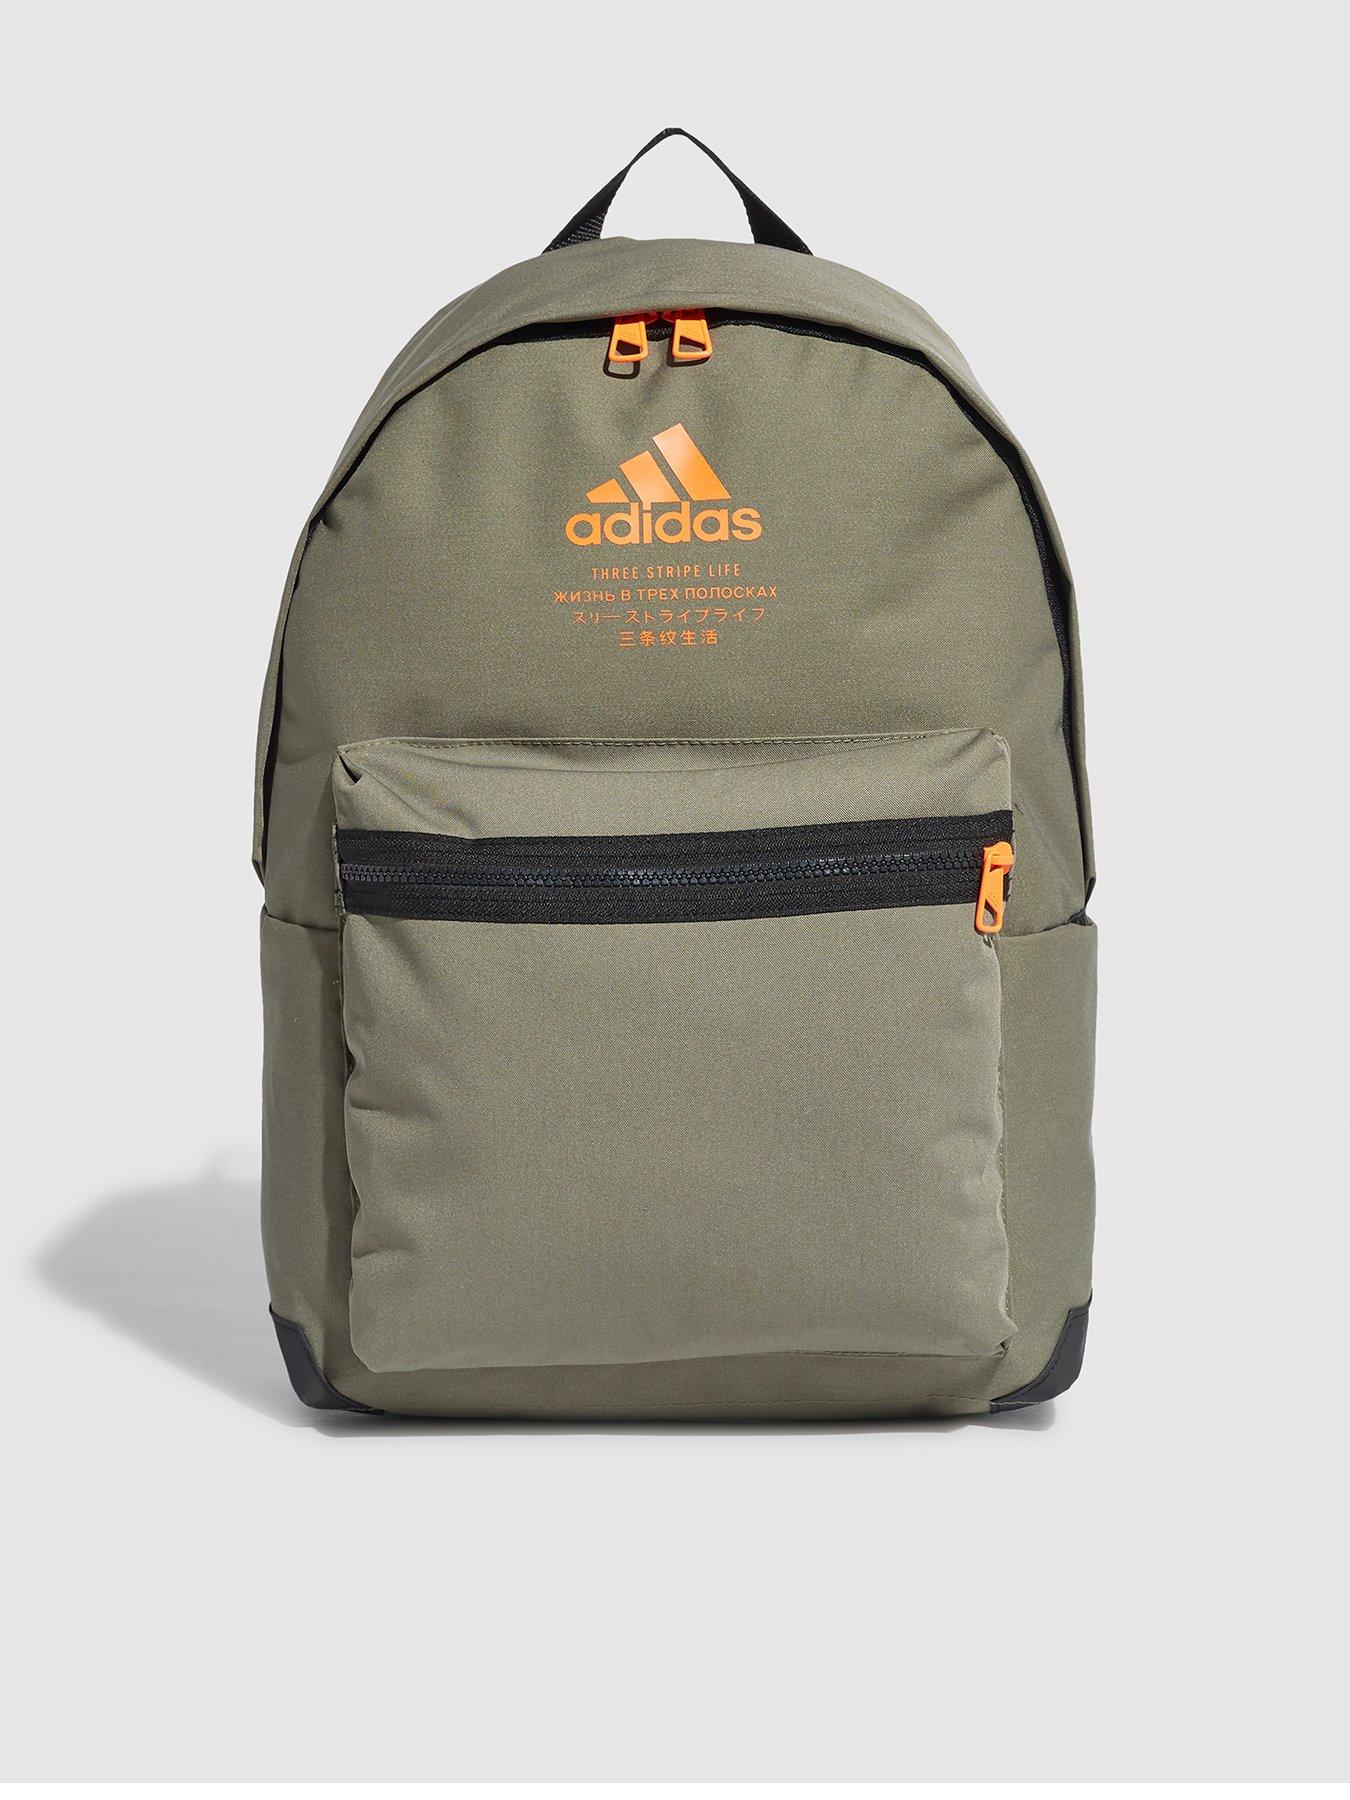 adidas backpack sale uk